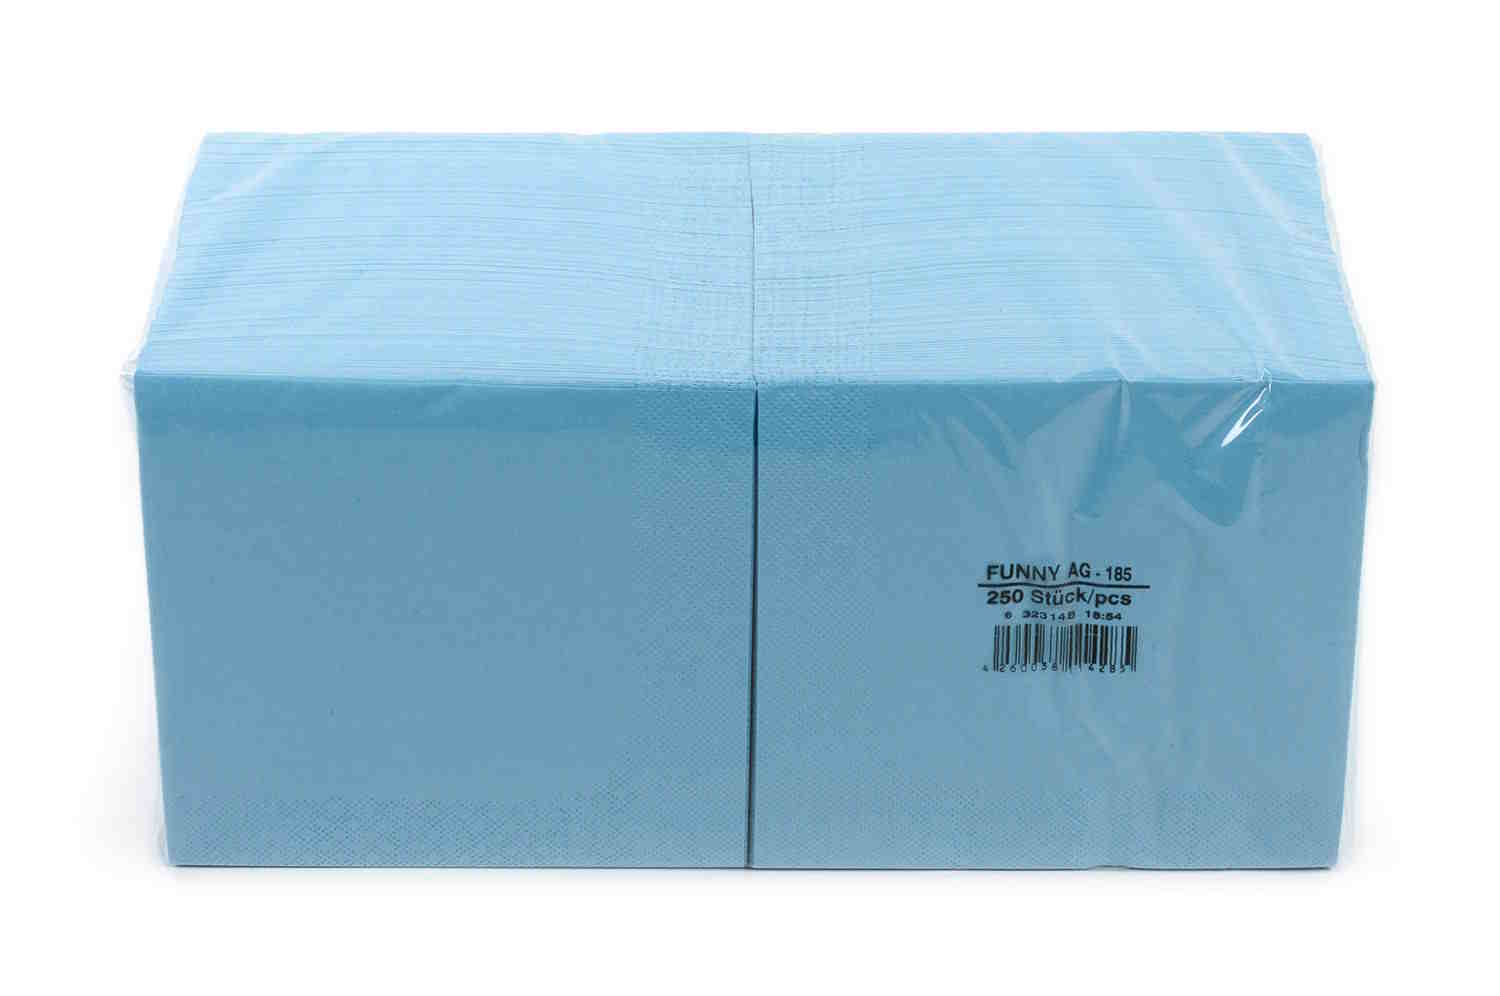 Funny Tafelserviette, 1/4 Falz, hellblau, 3lagig, 100% Zellstoff | Karton = 4 x 250 = 1000 Stück 